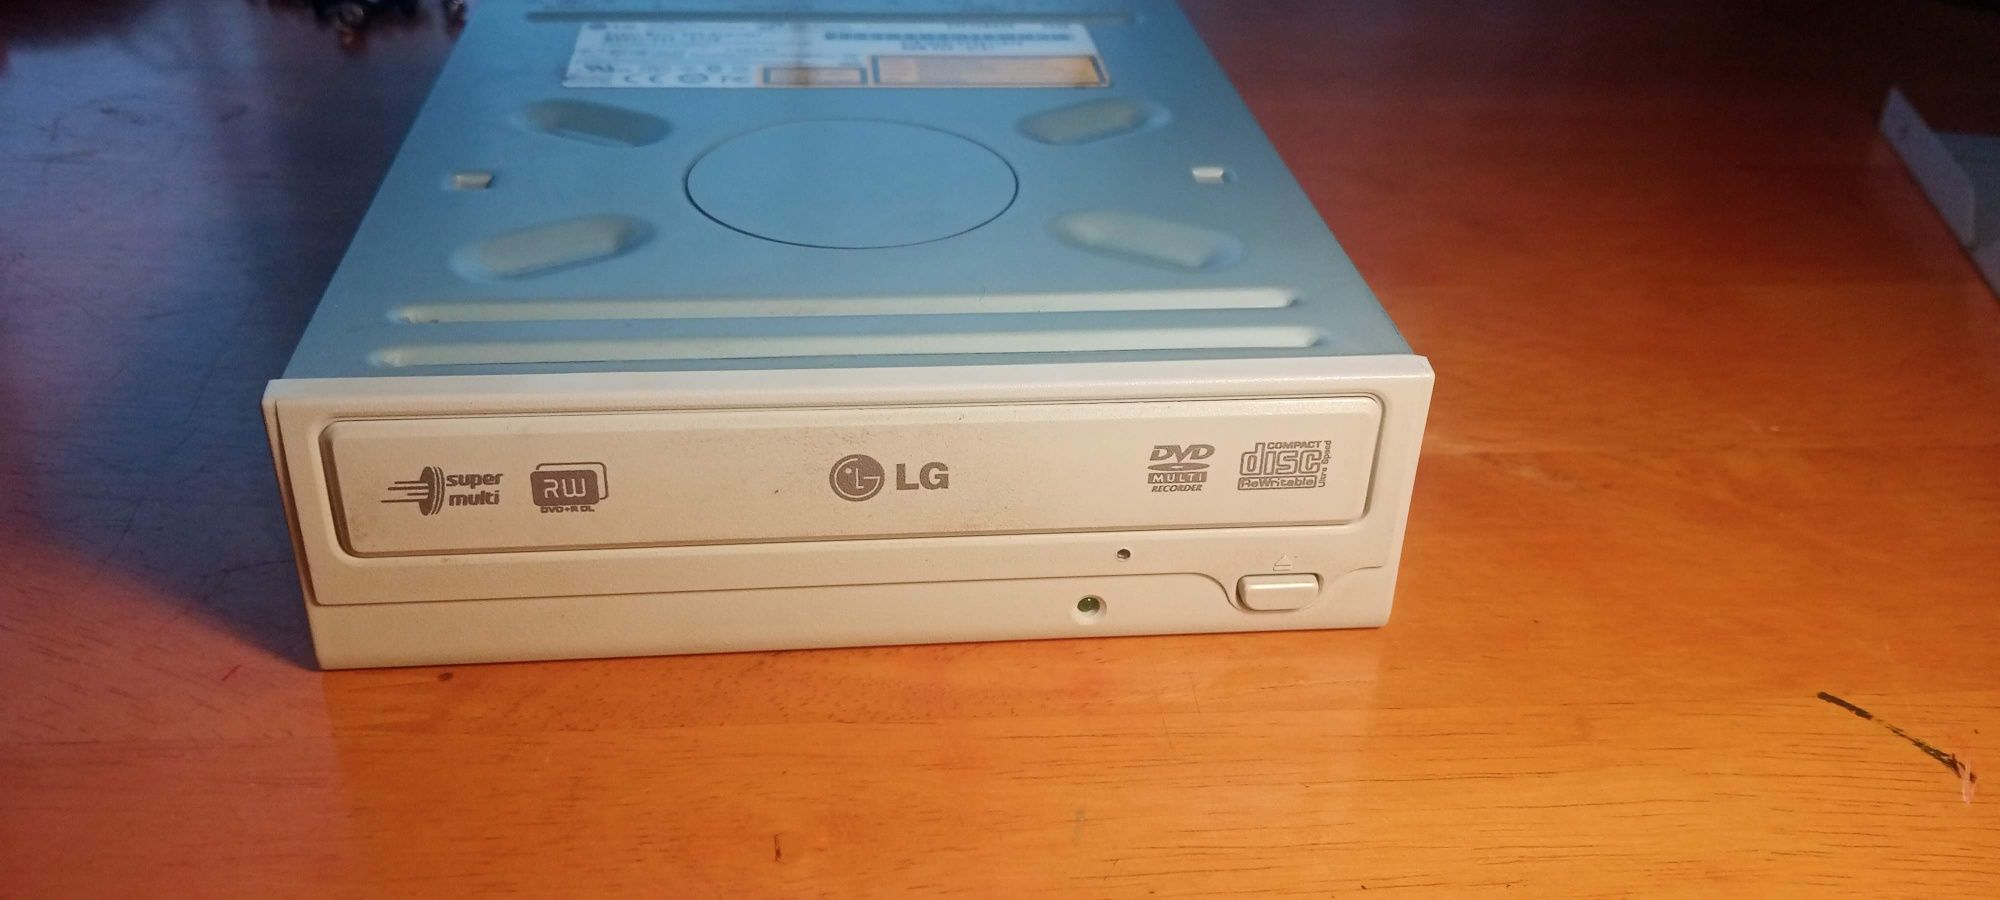 LG дисковод Super Multi DVD Rewriter

MODEL:GSA-H12N

MODEL:GSA-H12N